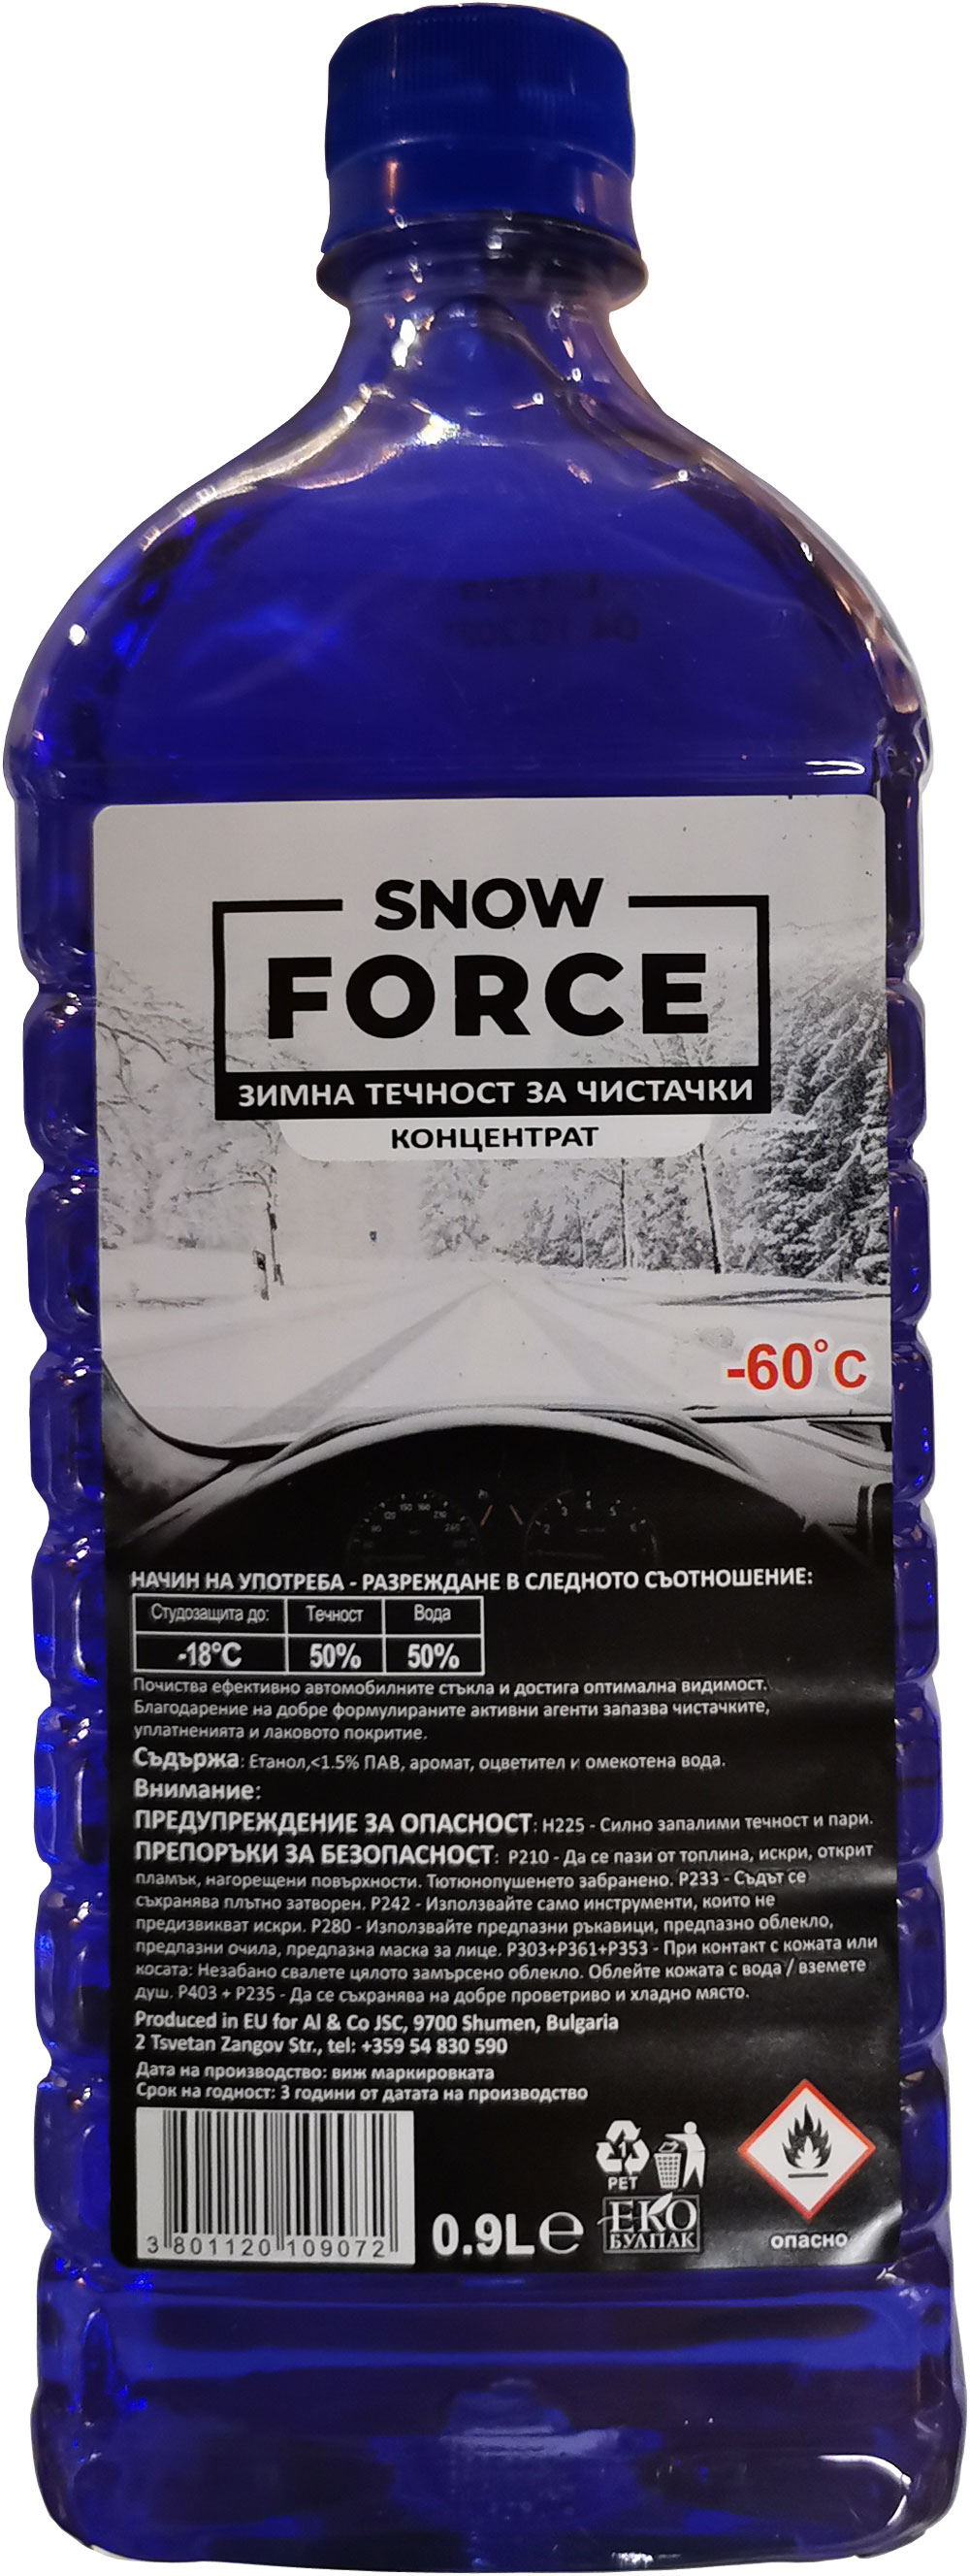 Аксесоари SNOW FORCE Течност за чистачки зимна 0.9L етанол конц. -60